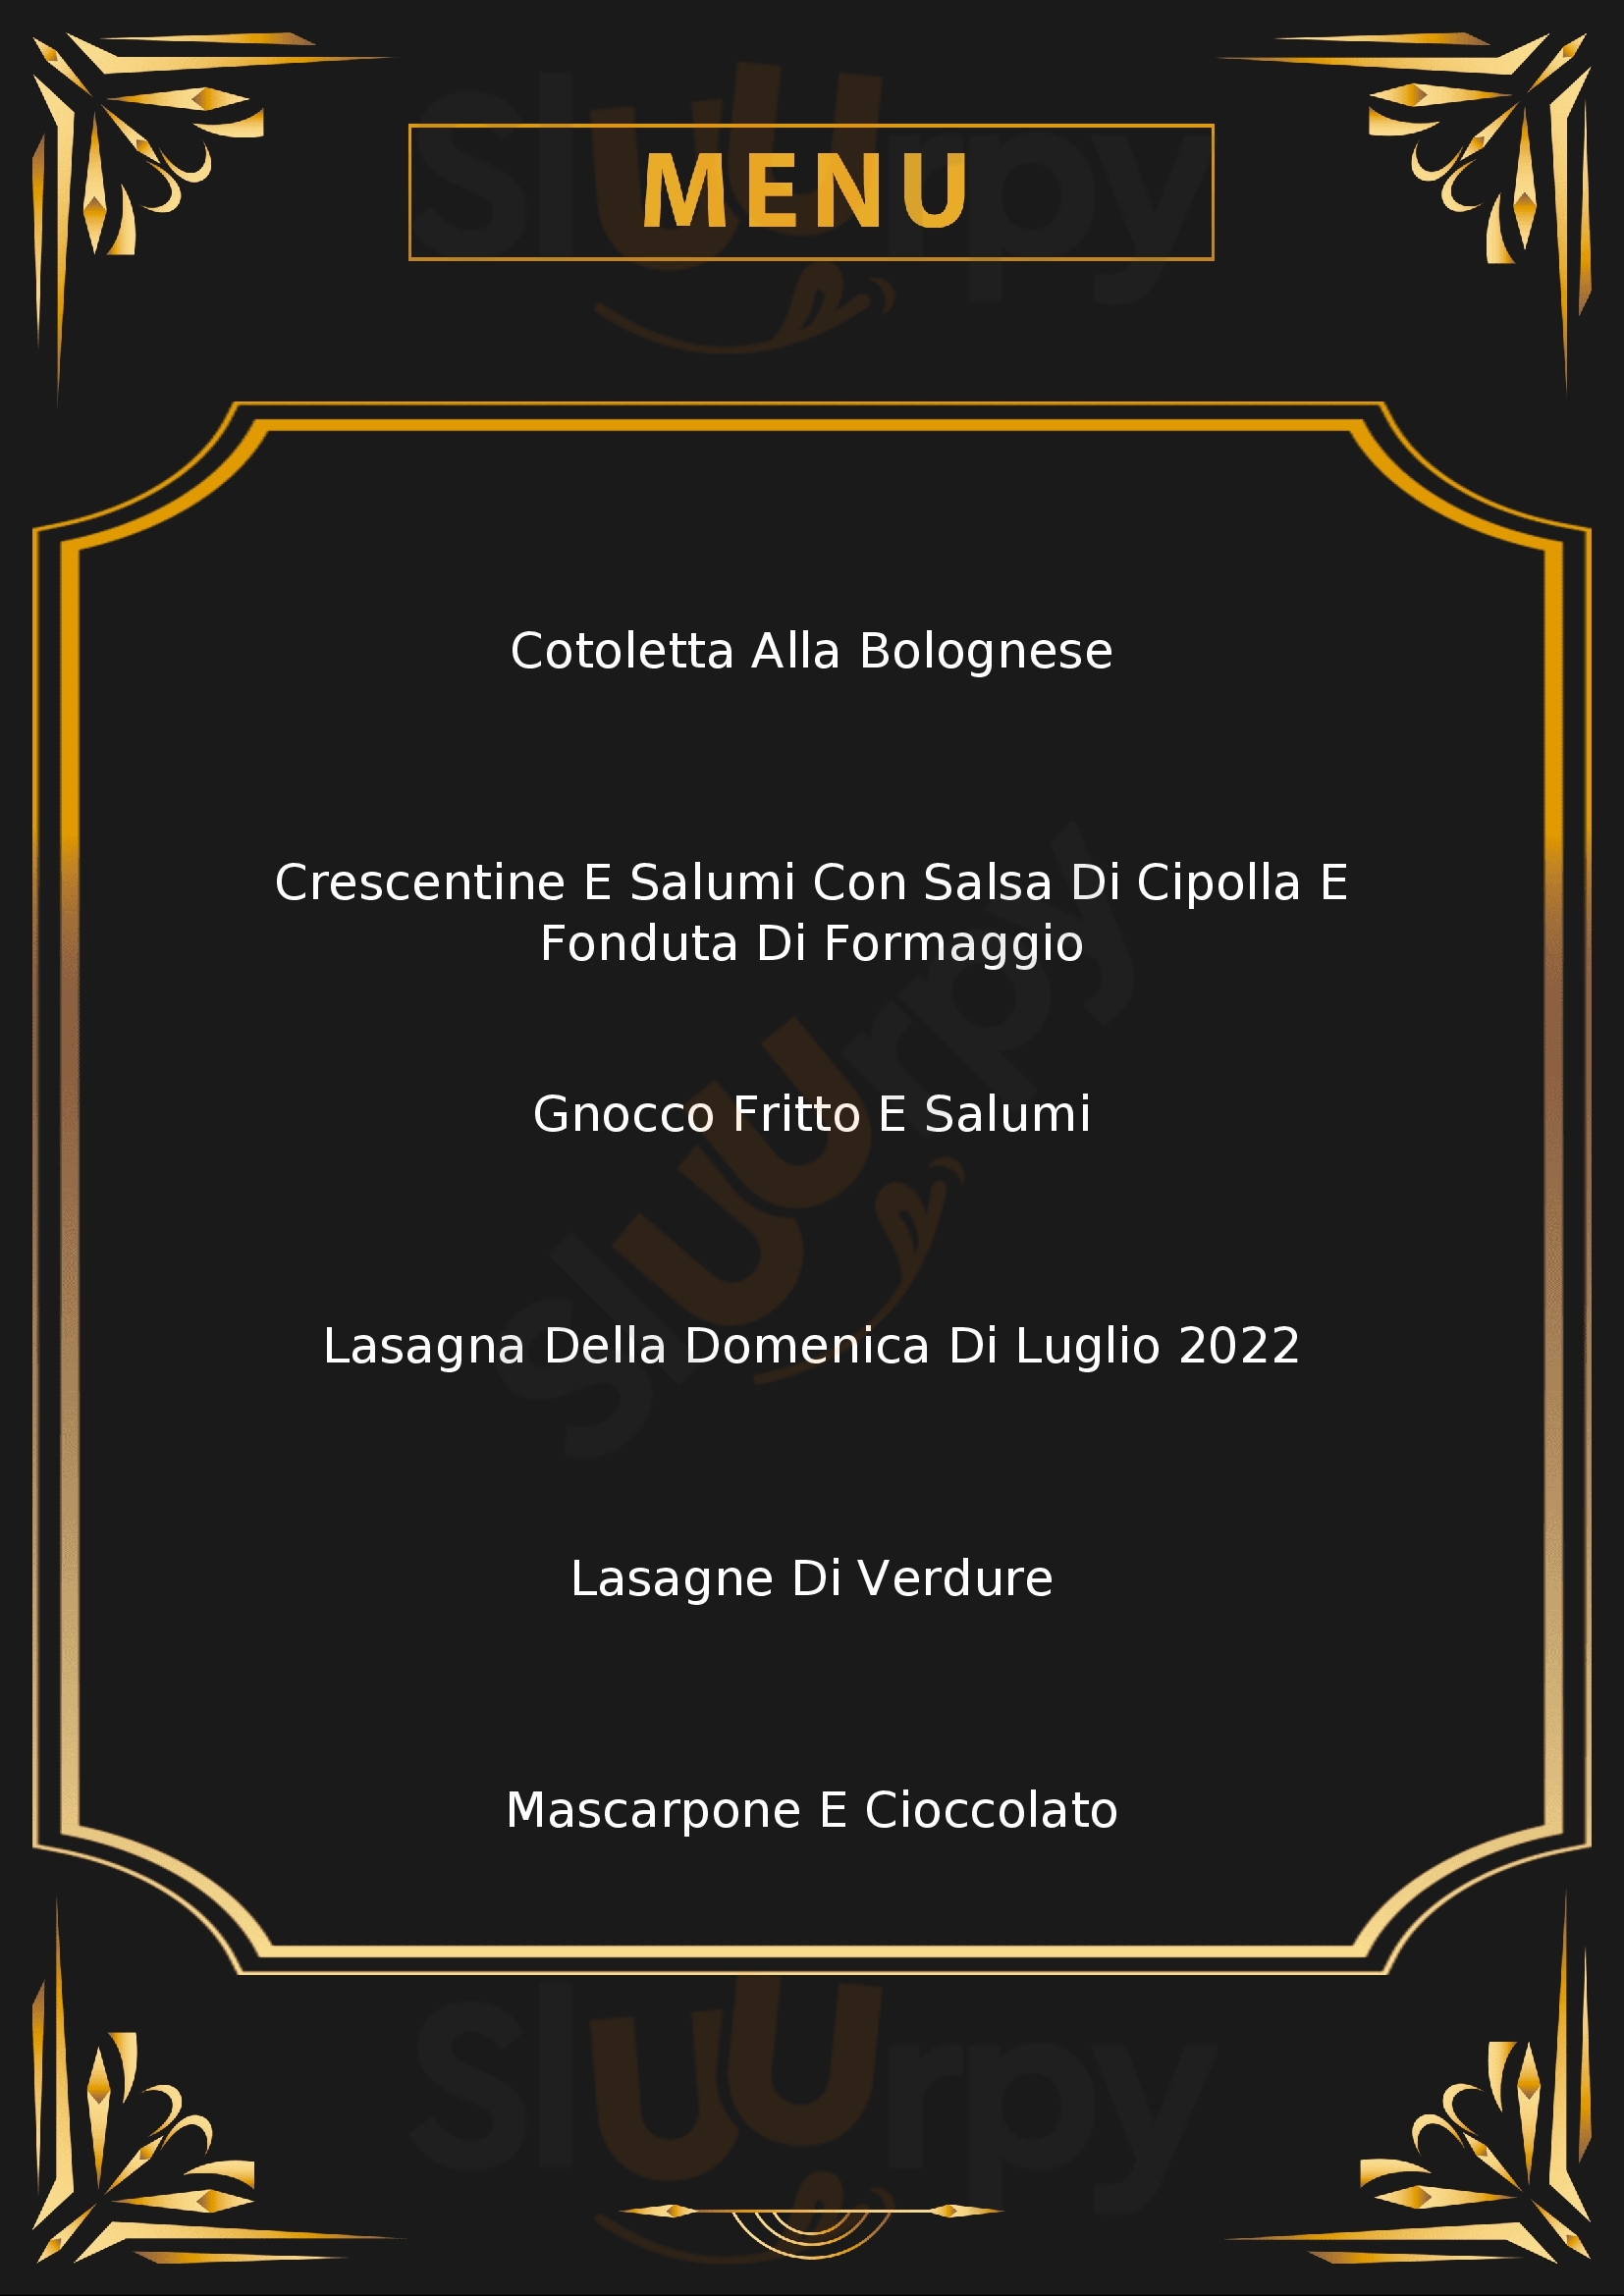 Antica Ricetta Bologna menù 1 pagina